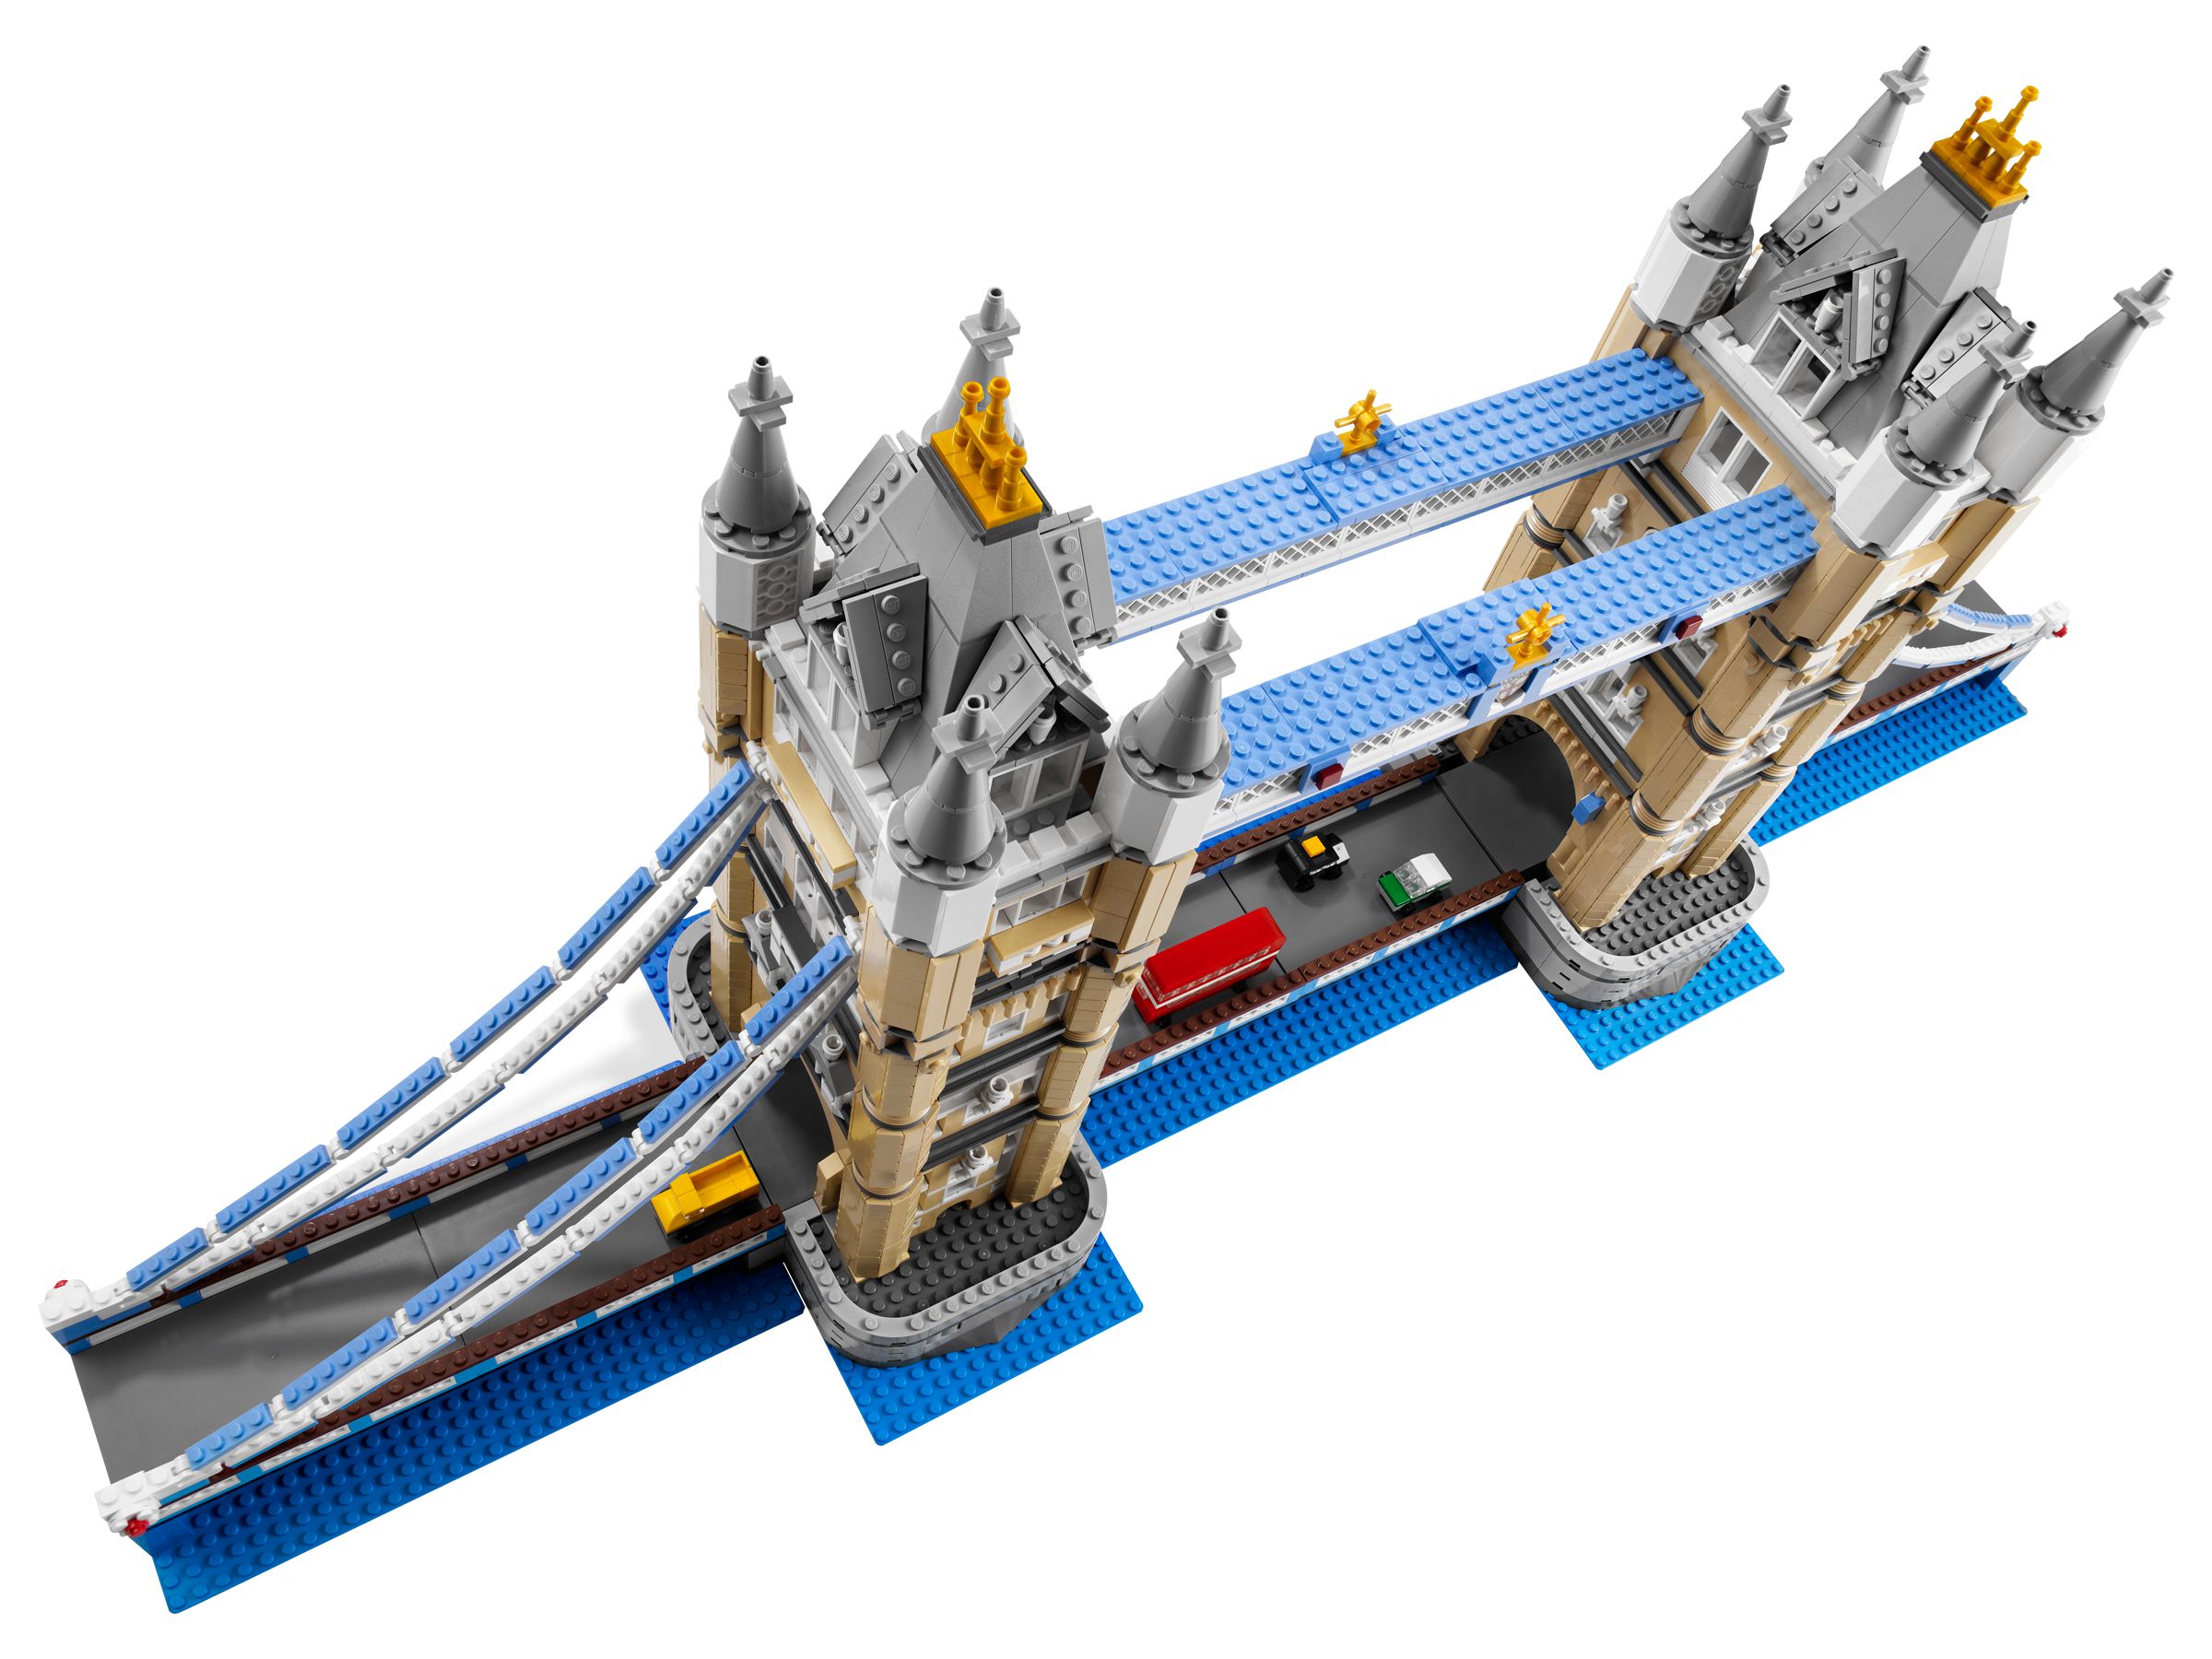 LEGO Advanced Models 10214 Tower Bridge LEGO_10214_alt5.jpg